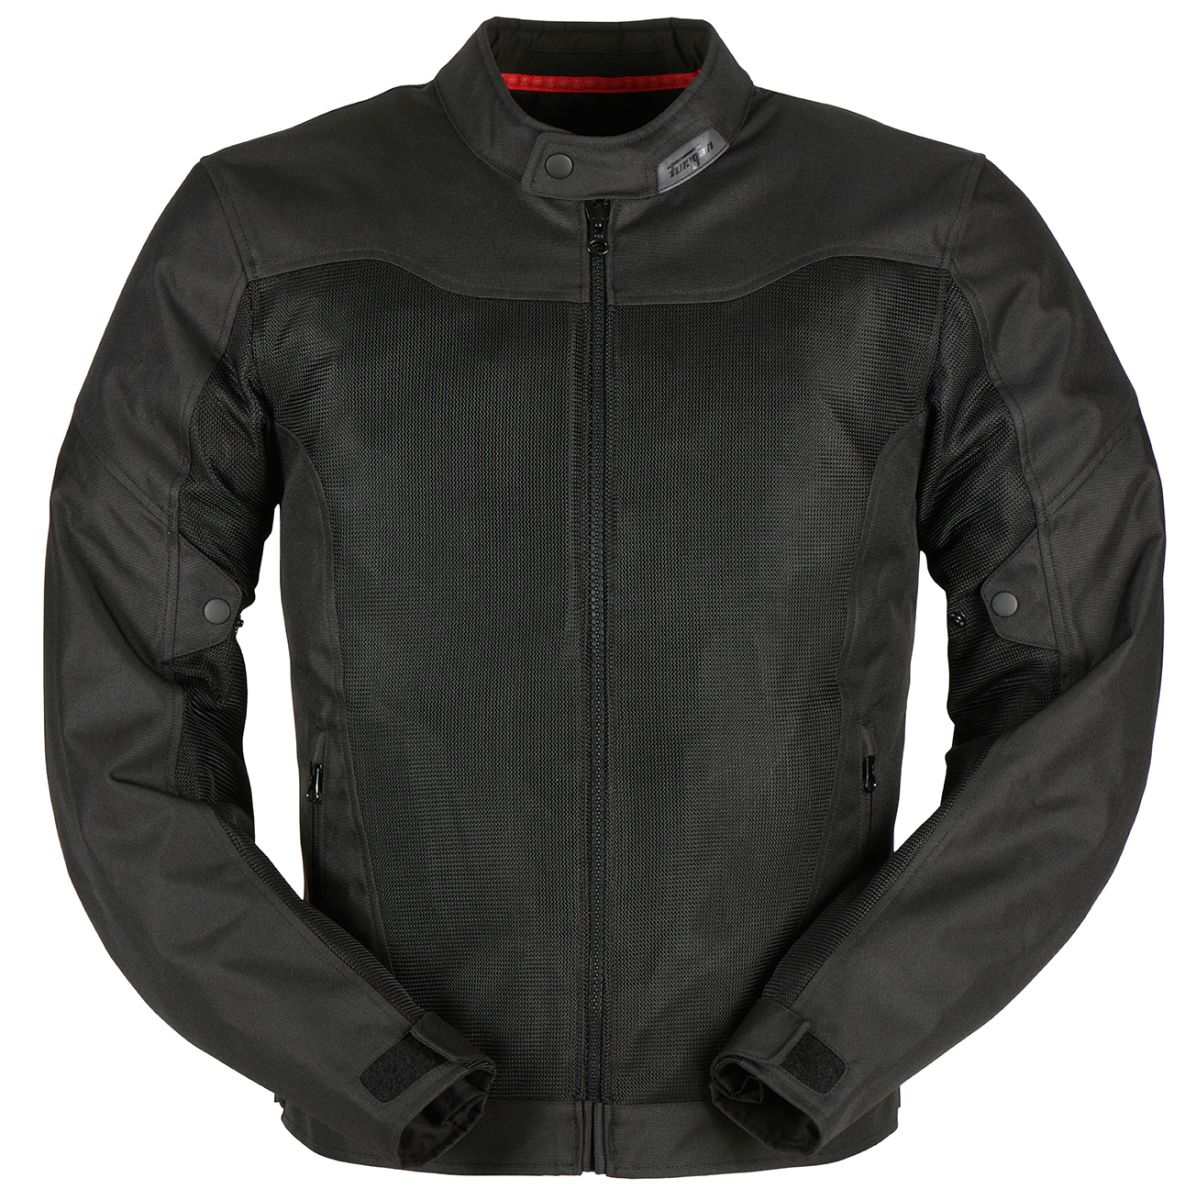 Image of Furygan Mistral 3 Evo Jacket Black Size L ID 3435980342036